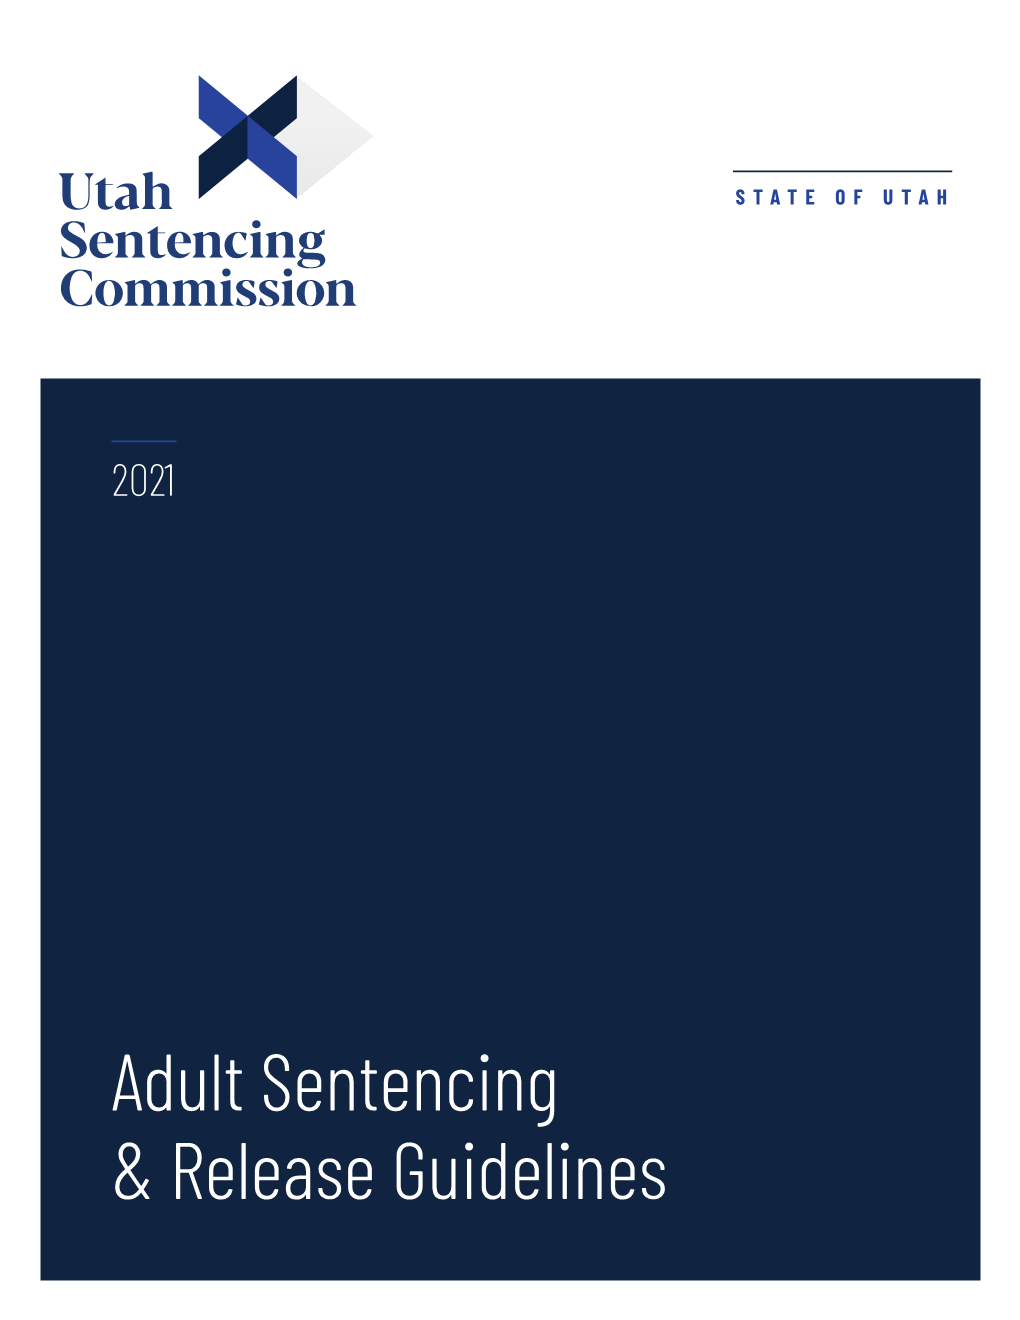 Adult Sentencing Guidelines